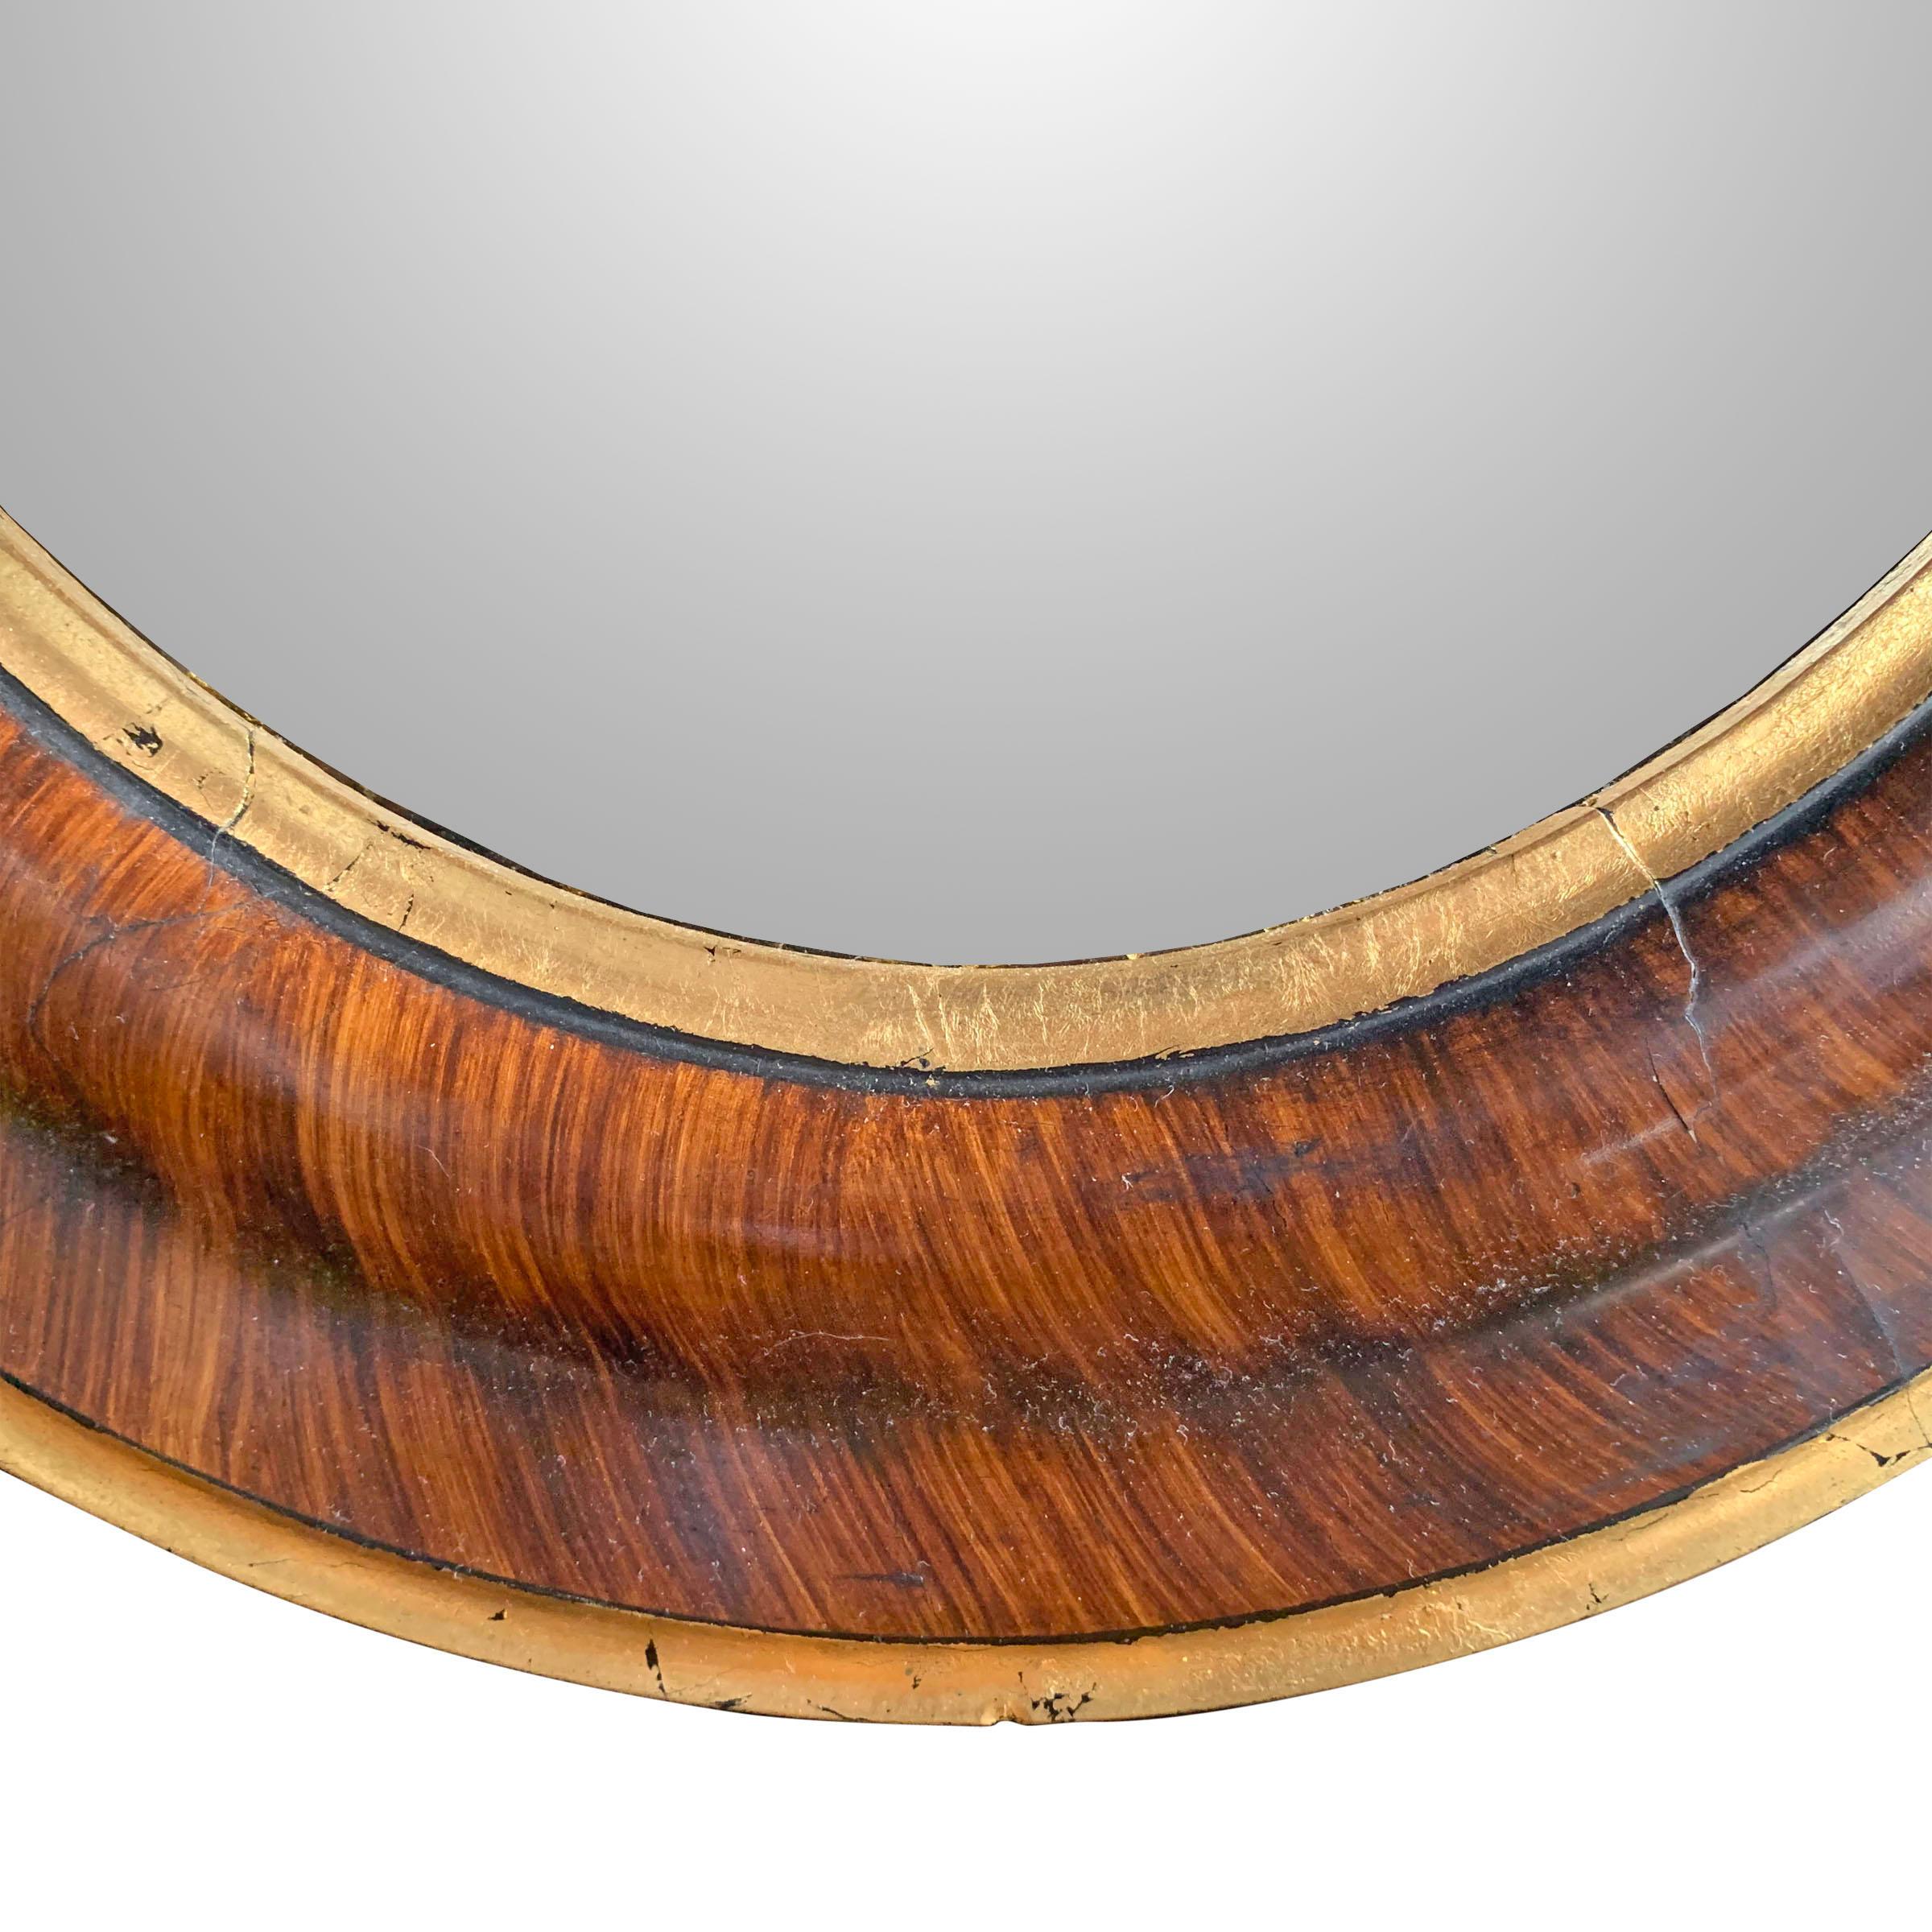 Wood 19th Century American Oval Convex Mirror